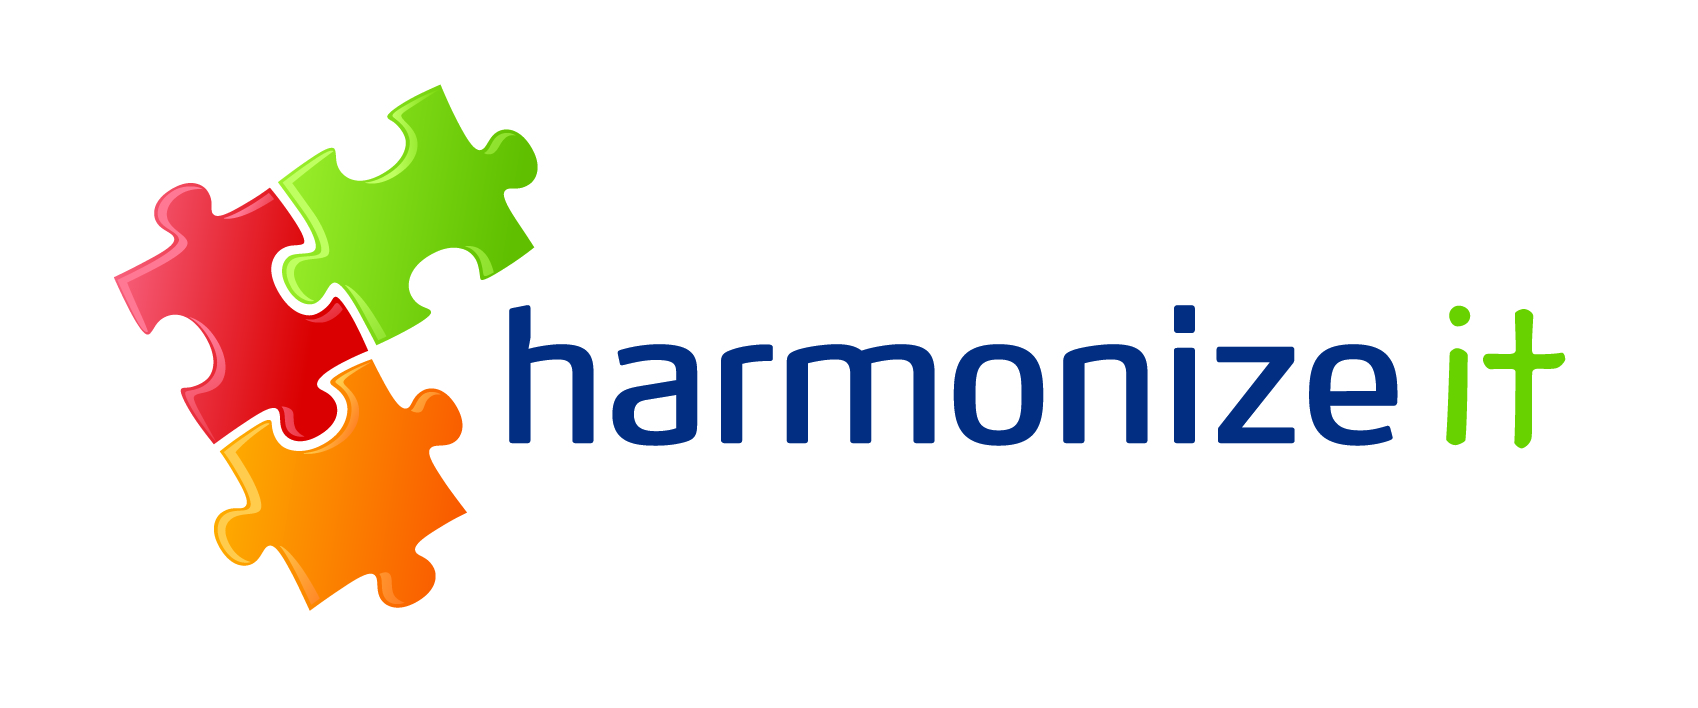 Harmonizeit partner logo